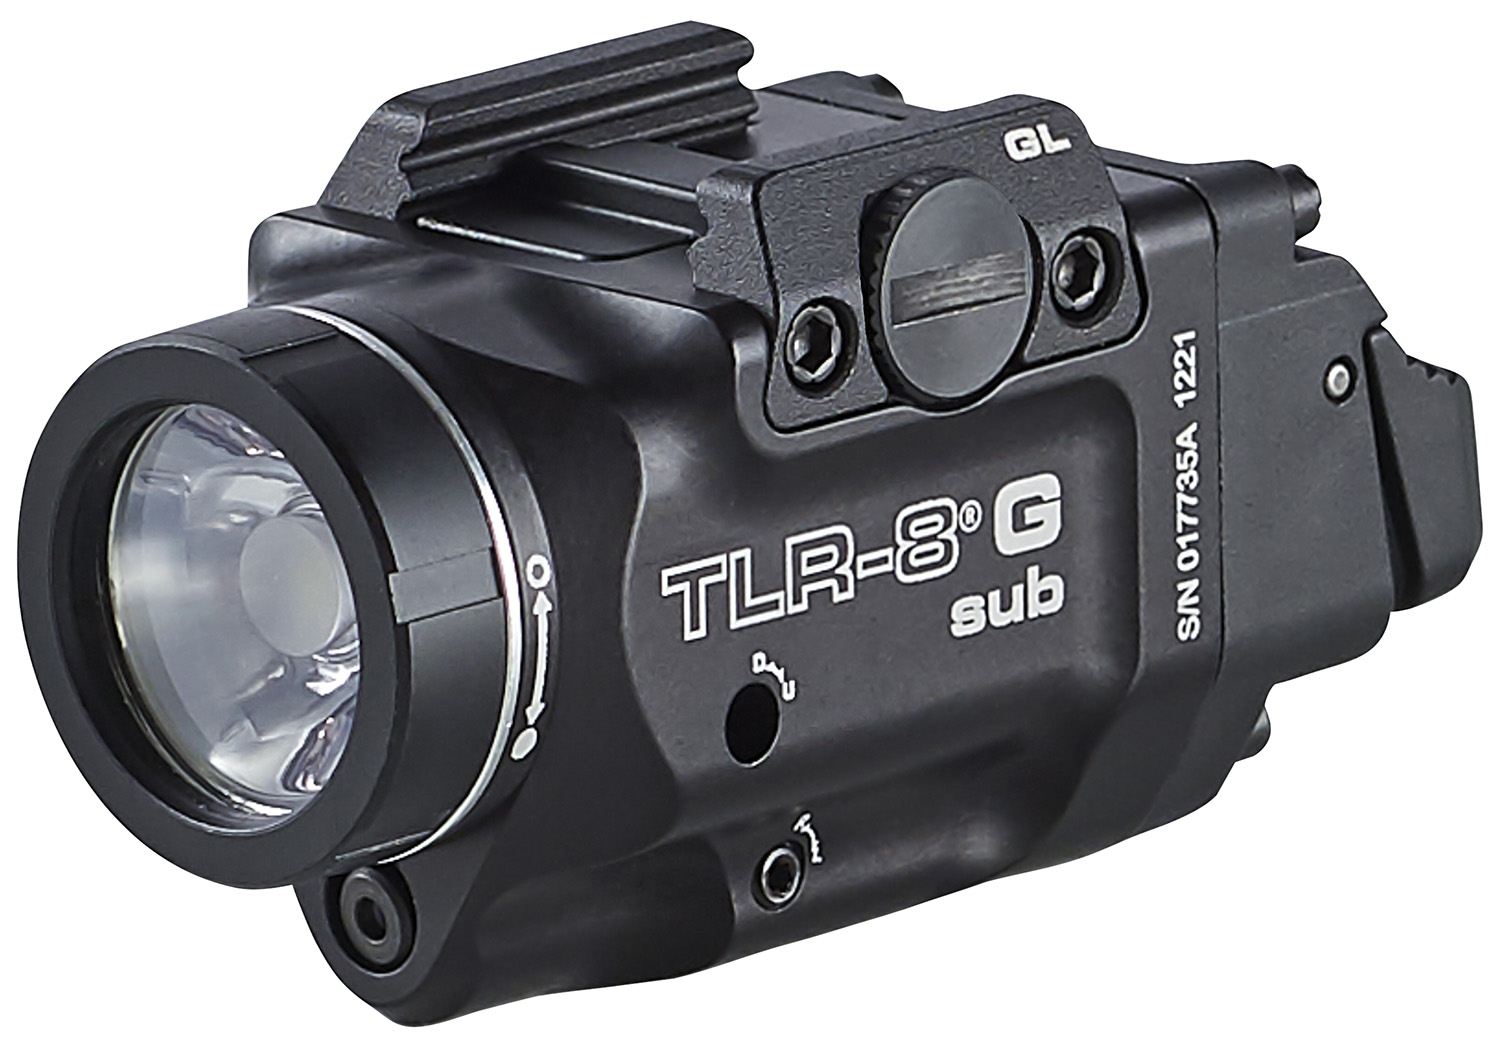 Streamlight 69431 TLR-8 Sub W/Laser Green Laser 500 Lumens 640-660Nm Wavelength, Black 141 Meters Beam Distance, Fits Gl